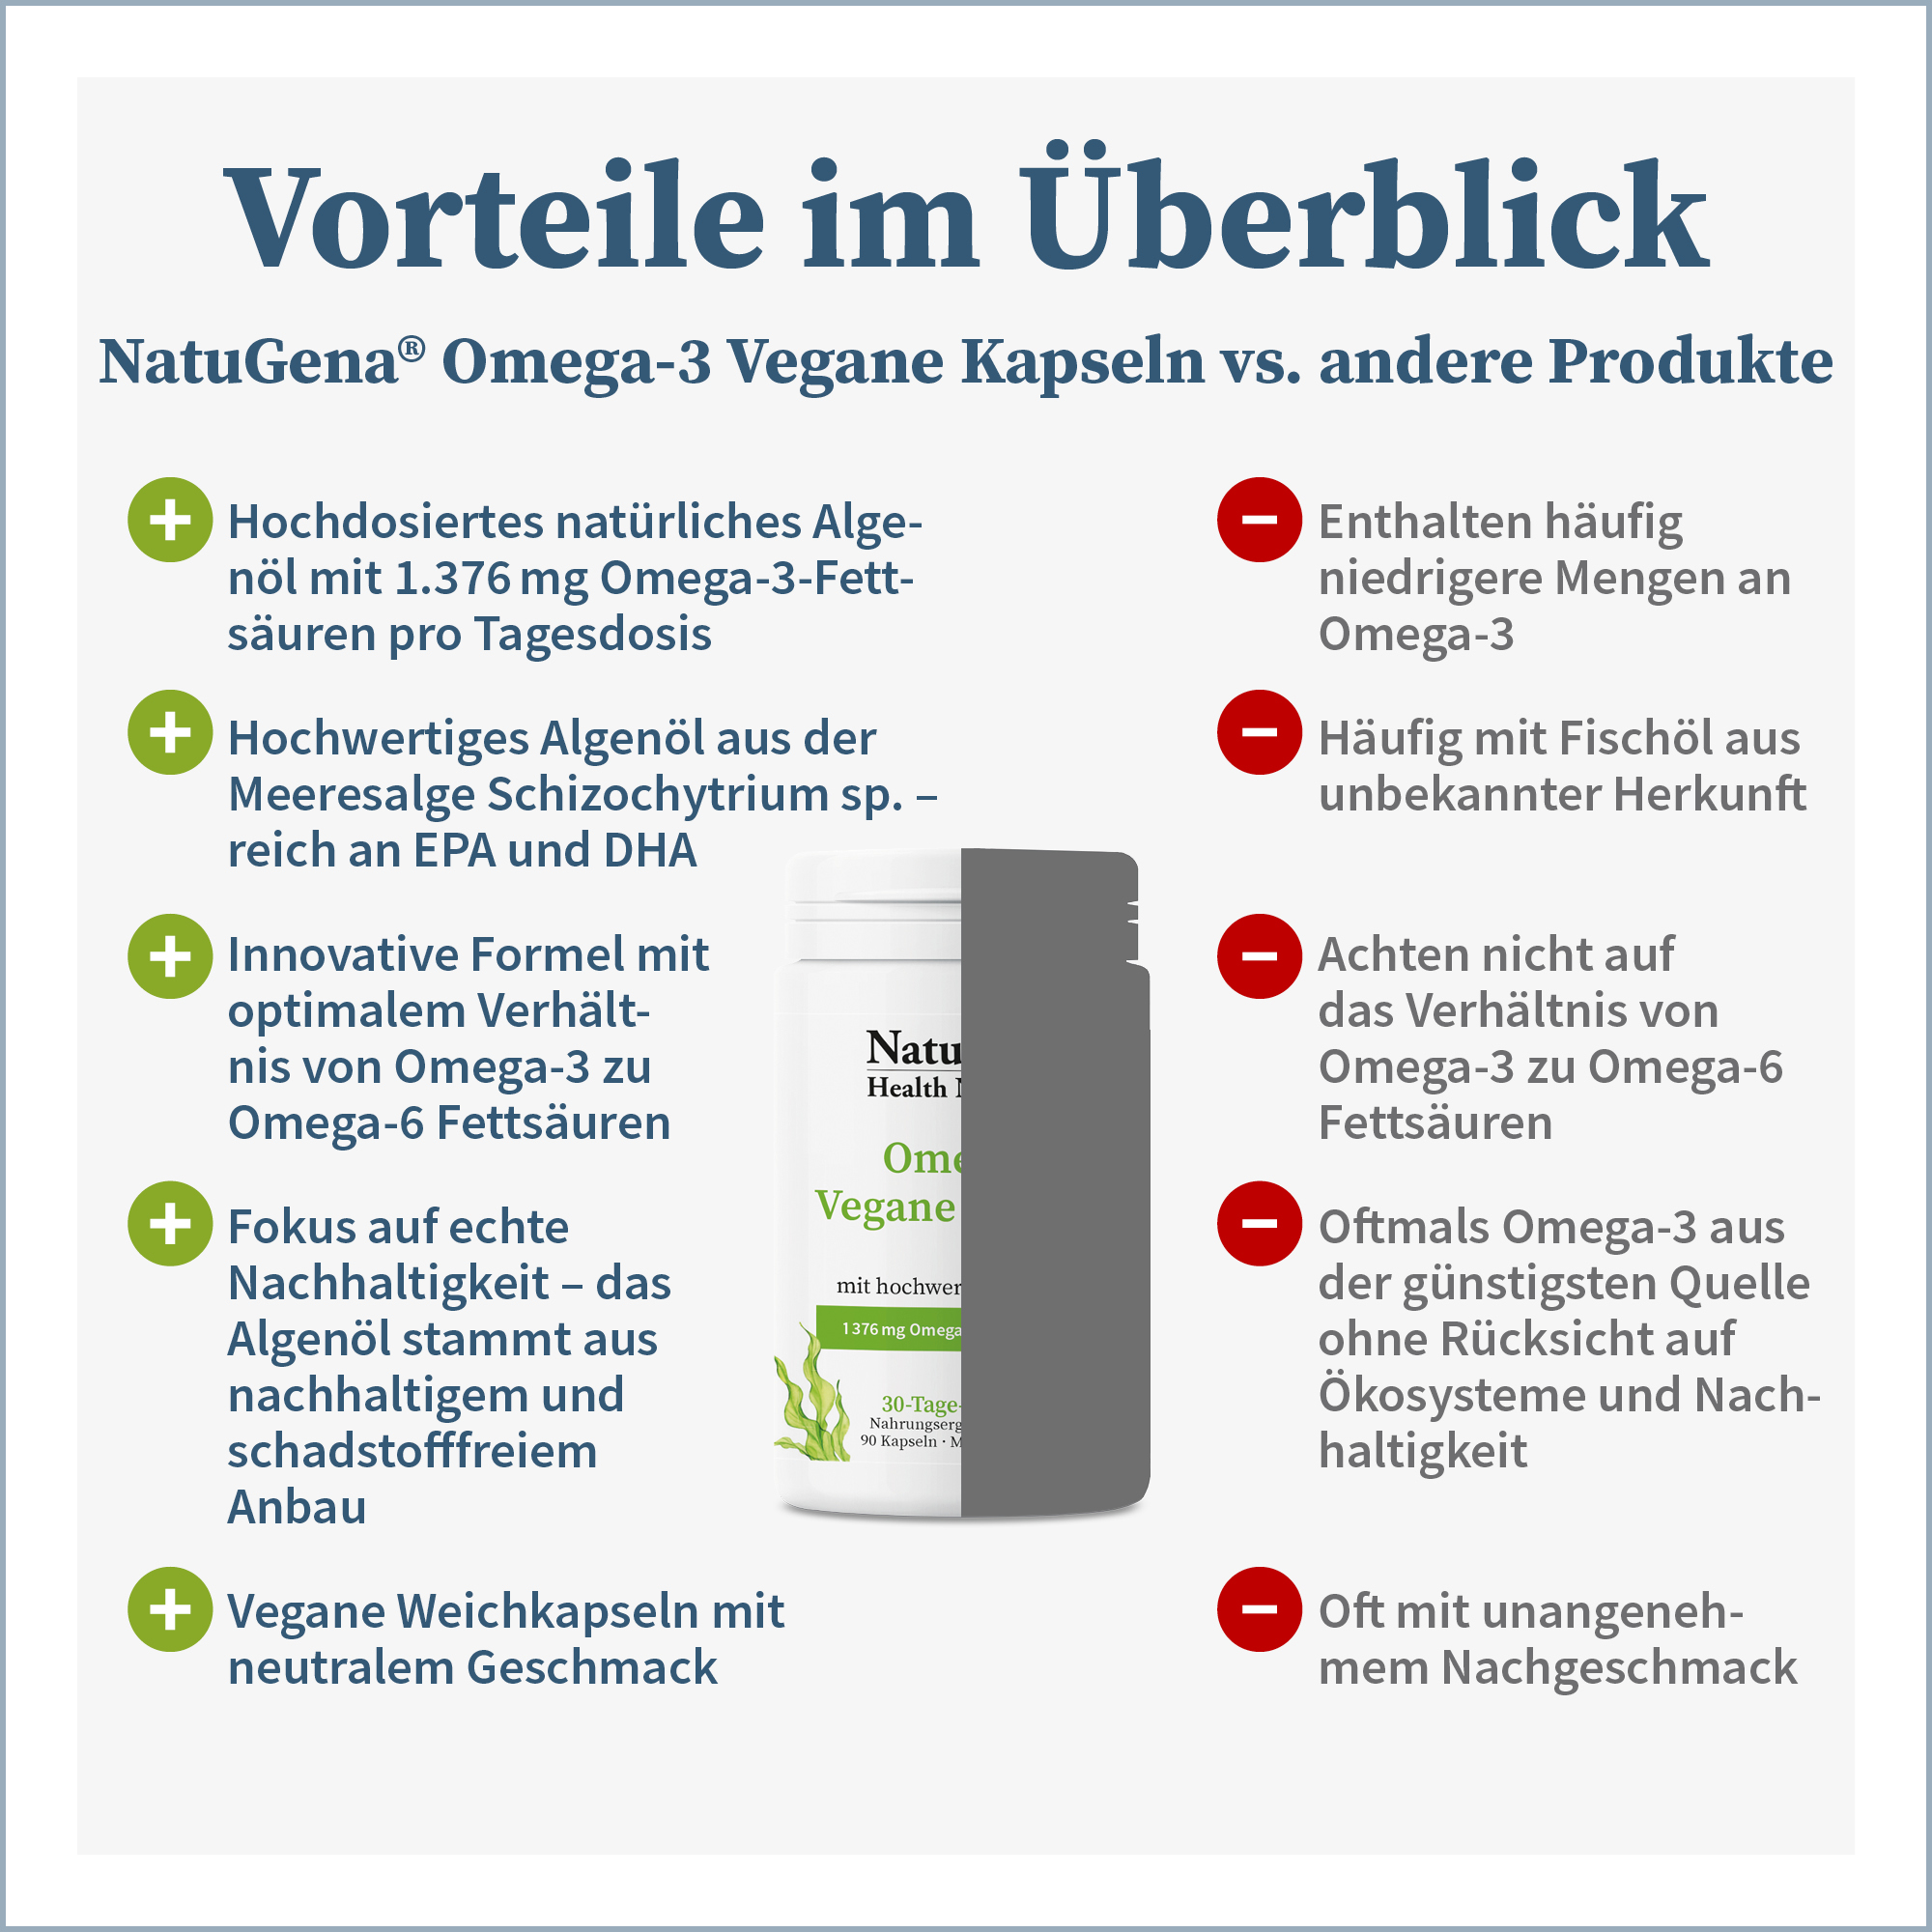 Omega-3 Vegane Kapseln von NatuGena - Produktvorteile